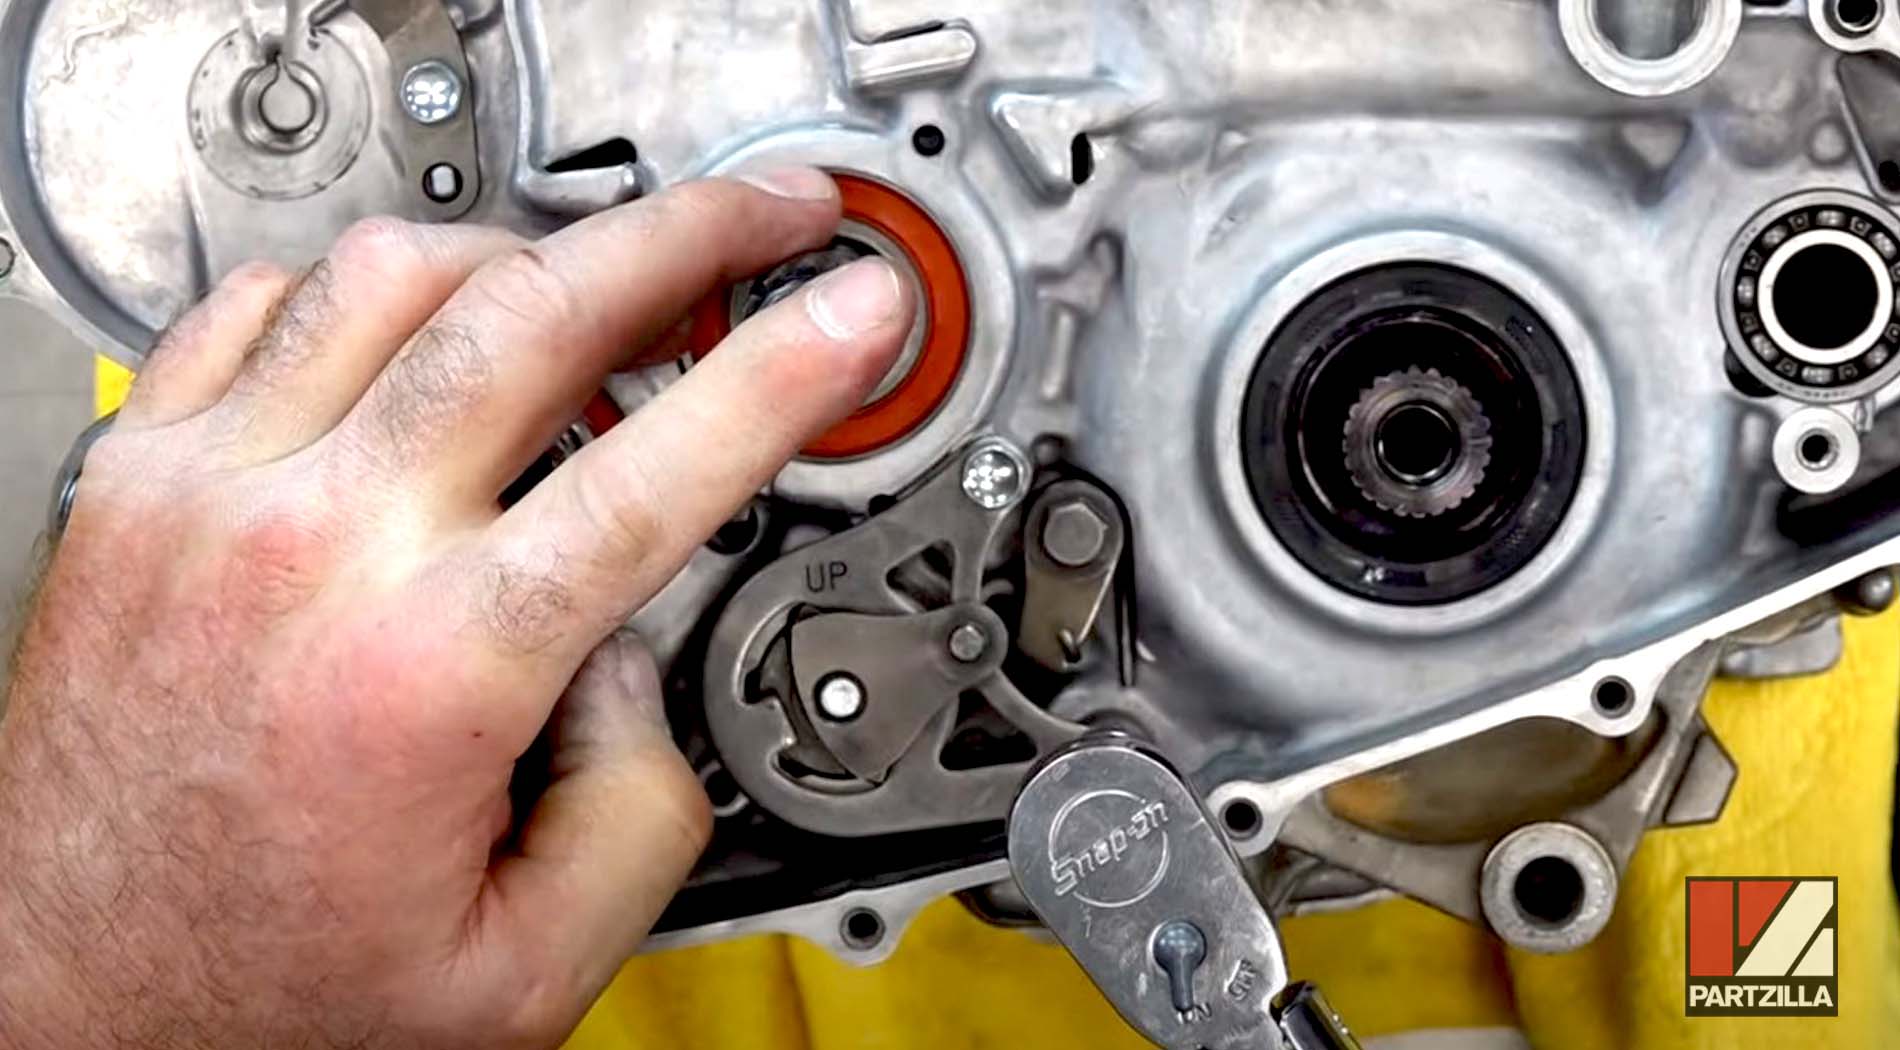 Honda CRF450 engine rebuild guide plate